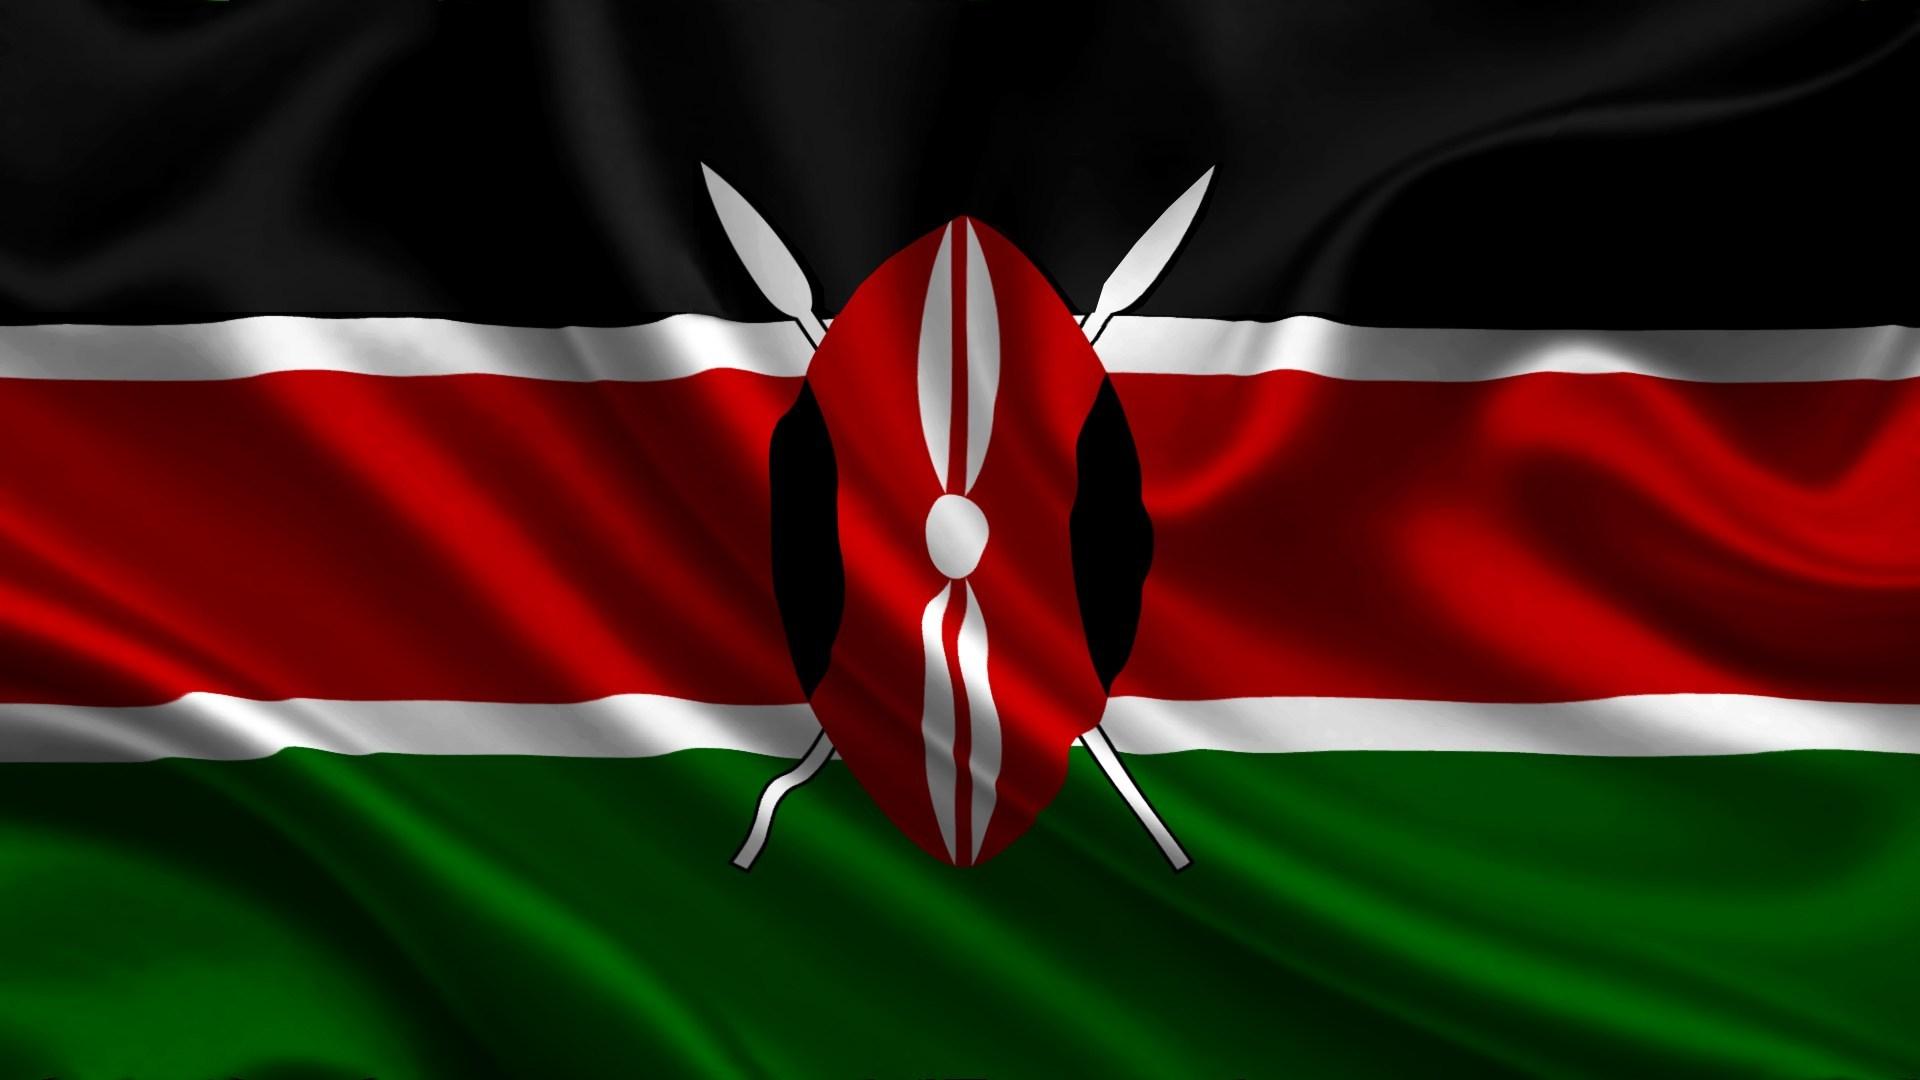 Kenya Flag HD Image and Wallpaper 2016 Free Download